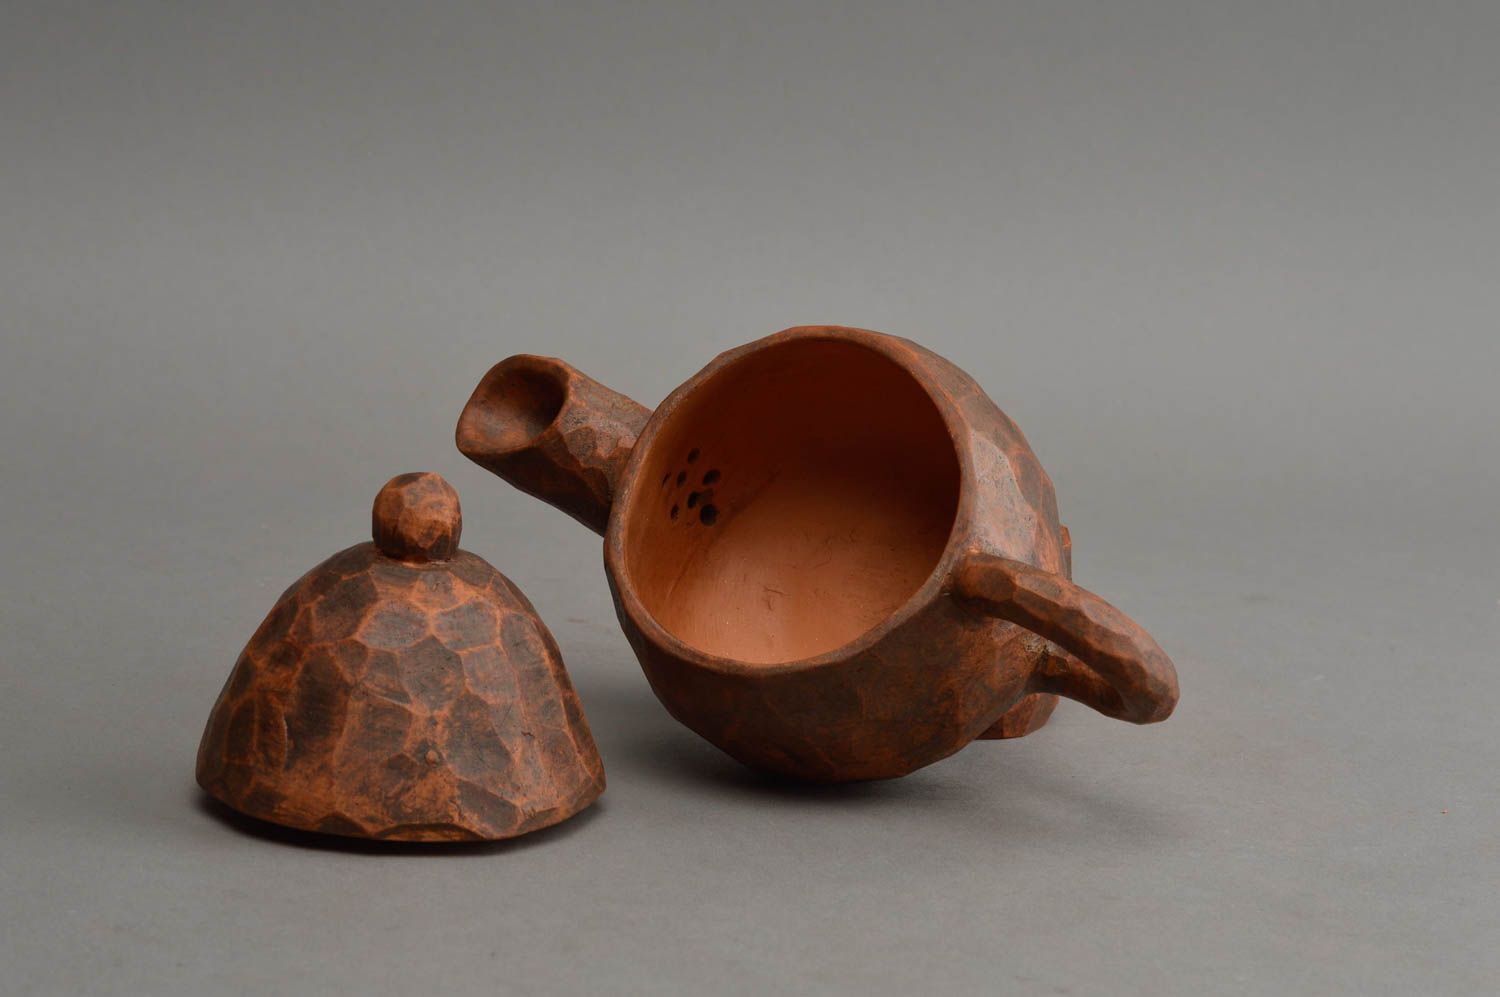 Unusual handmade ceramic teapot designer clay teapot table setting ideas photo 4